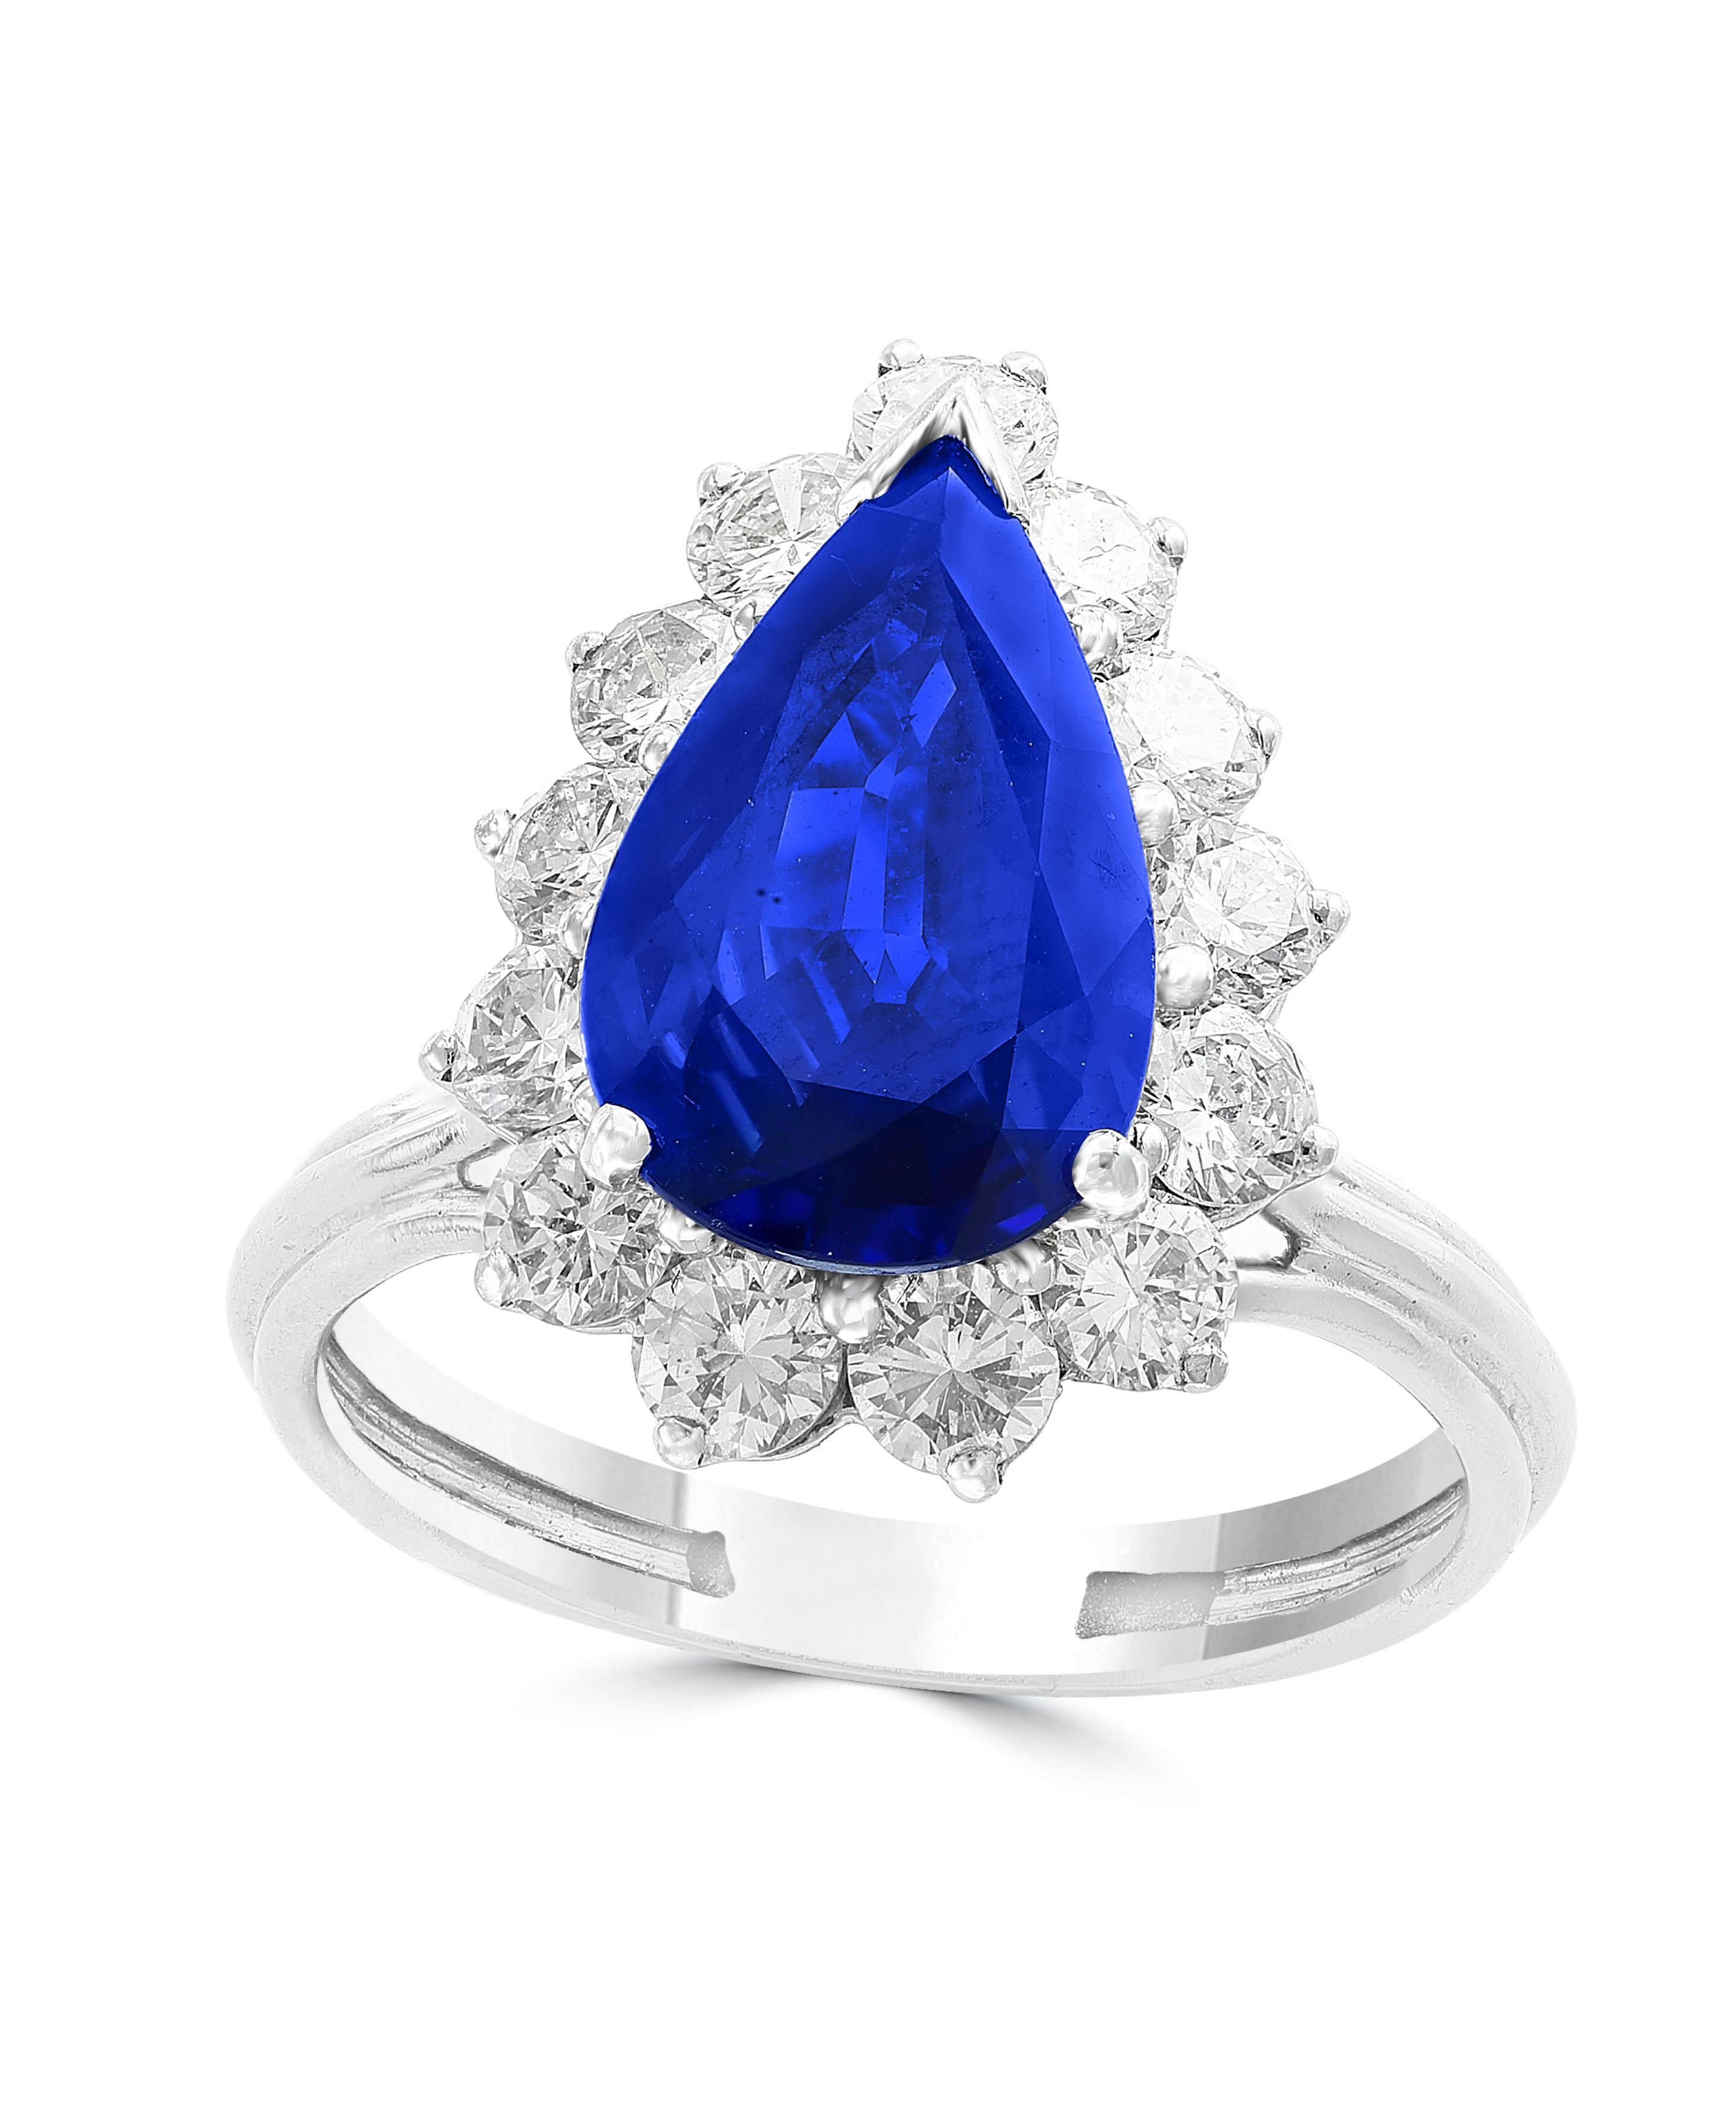 4.2 Carat  Ceylon  Blue  Pear shape Sapphire & Diamond Cocktail Ring In Platinum
Diamonds : 2 Carats
Platinum : 7.5 gm
GIA Certified , GIA Repoprt # 5201277214
Natural corundum 
Sapphire 
Sri Lanka
Measuremeants 14.16 x 8.69 x 4.53
Ring size